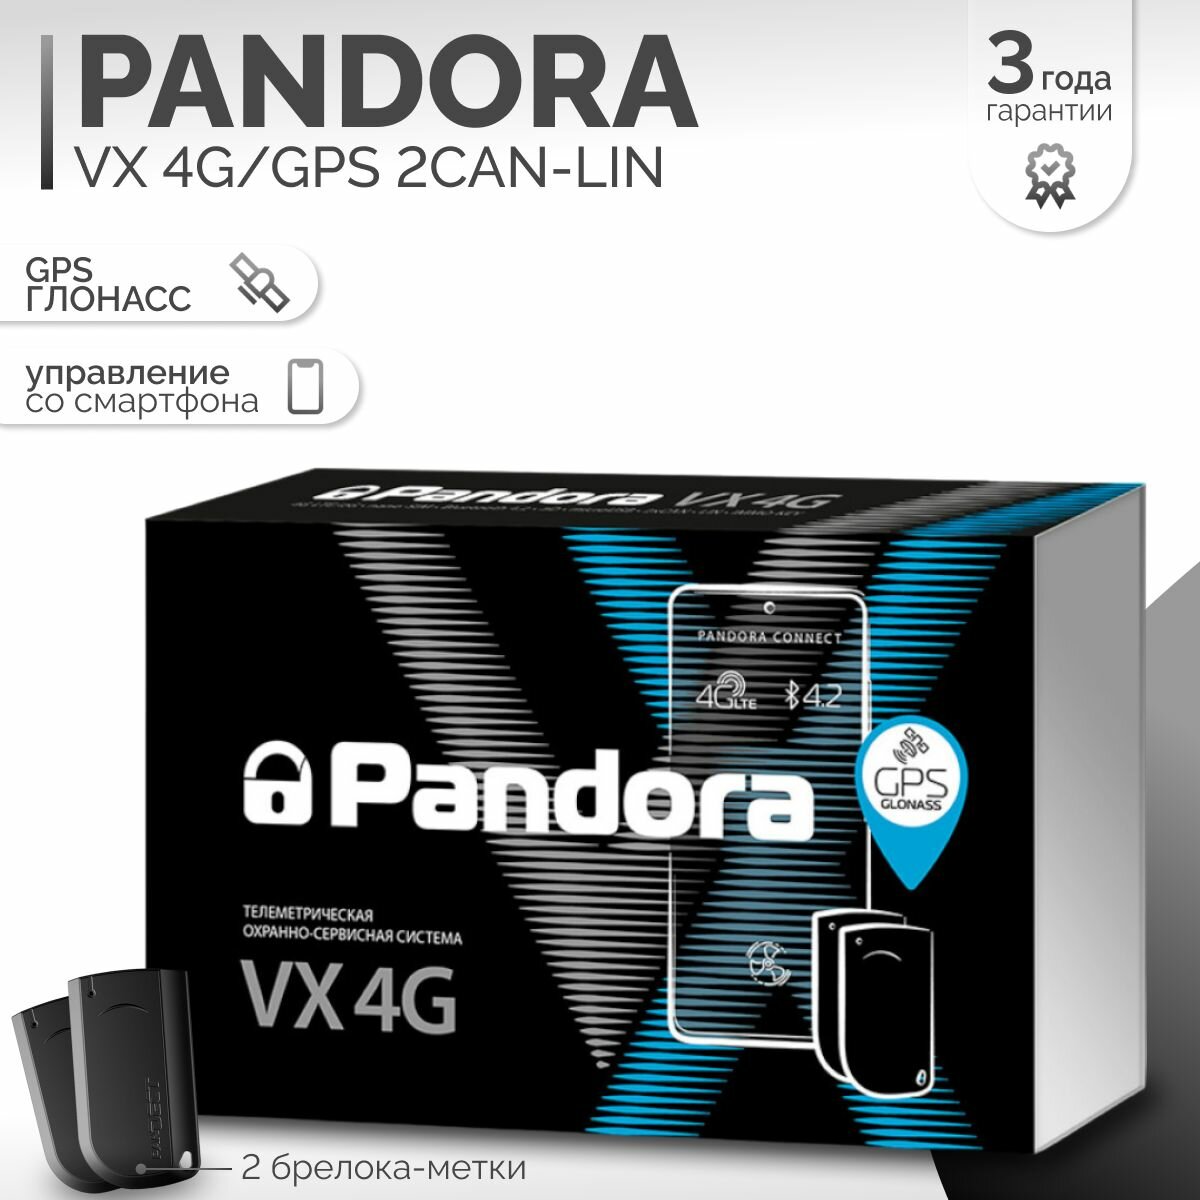 Автосигнализация PANDORA VX 4G/GPS 2can-lin